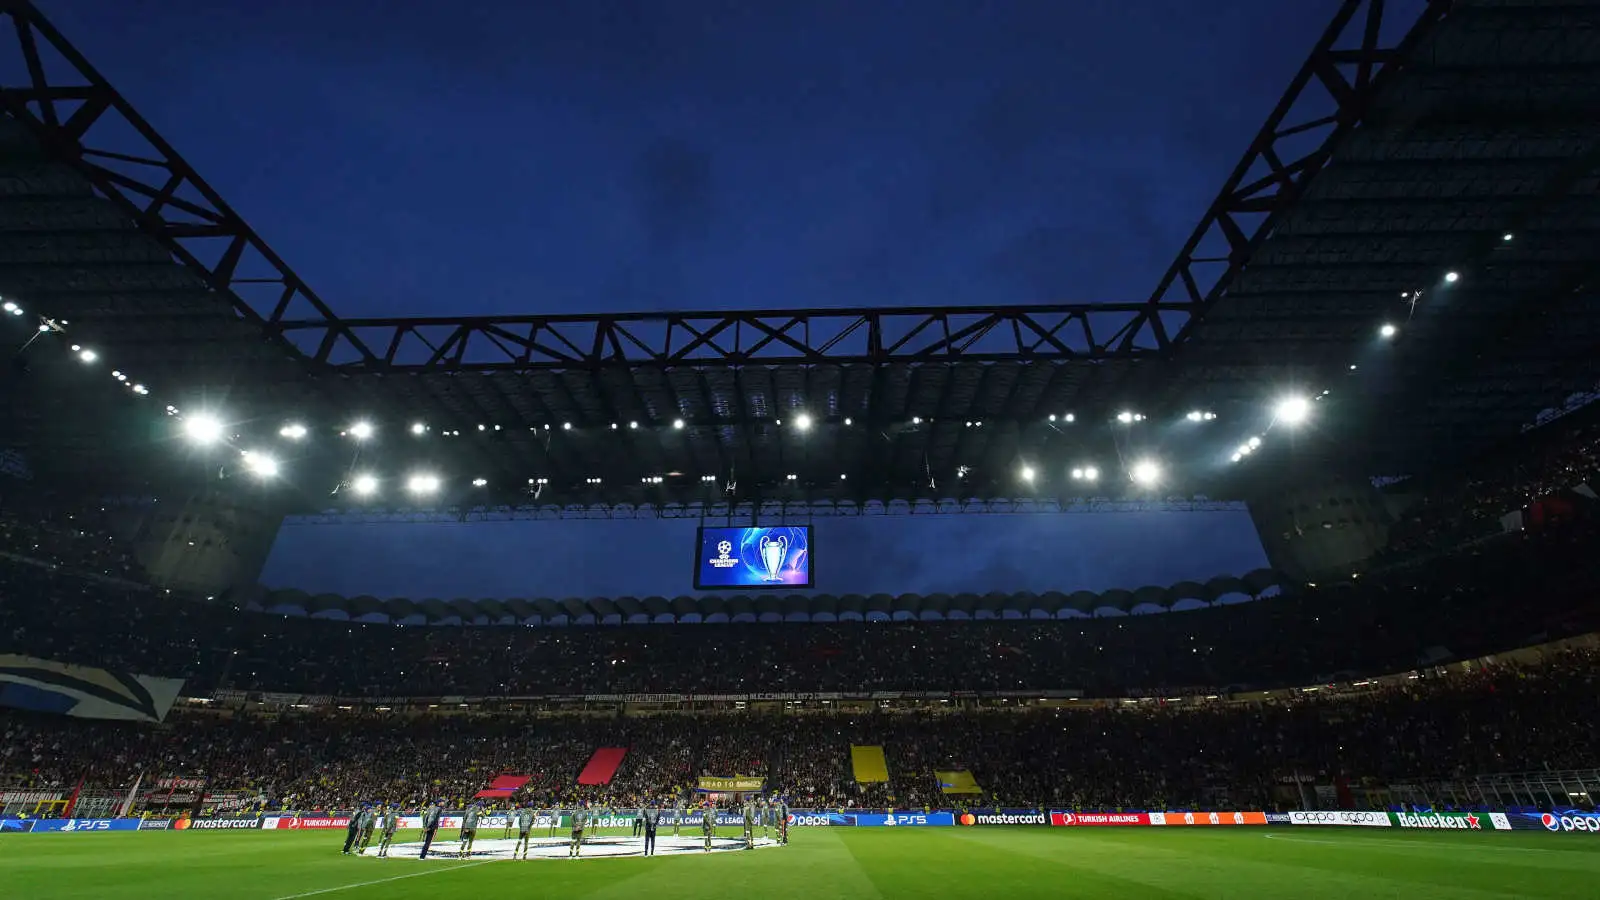 The San Siro before kick-off of the Milan vs Inter Champions League semi-final